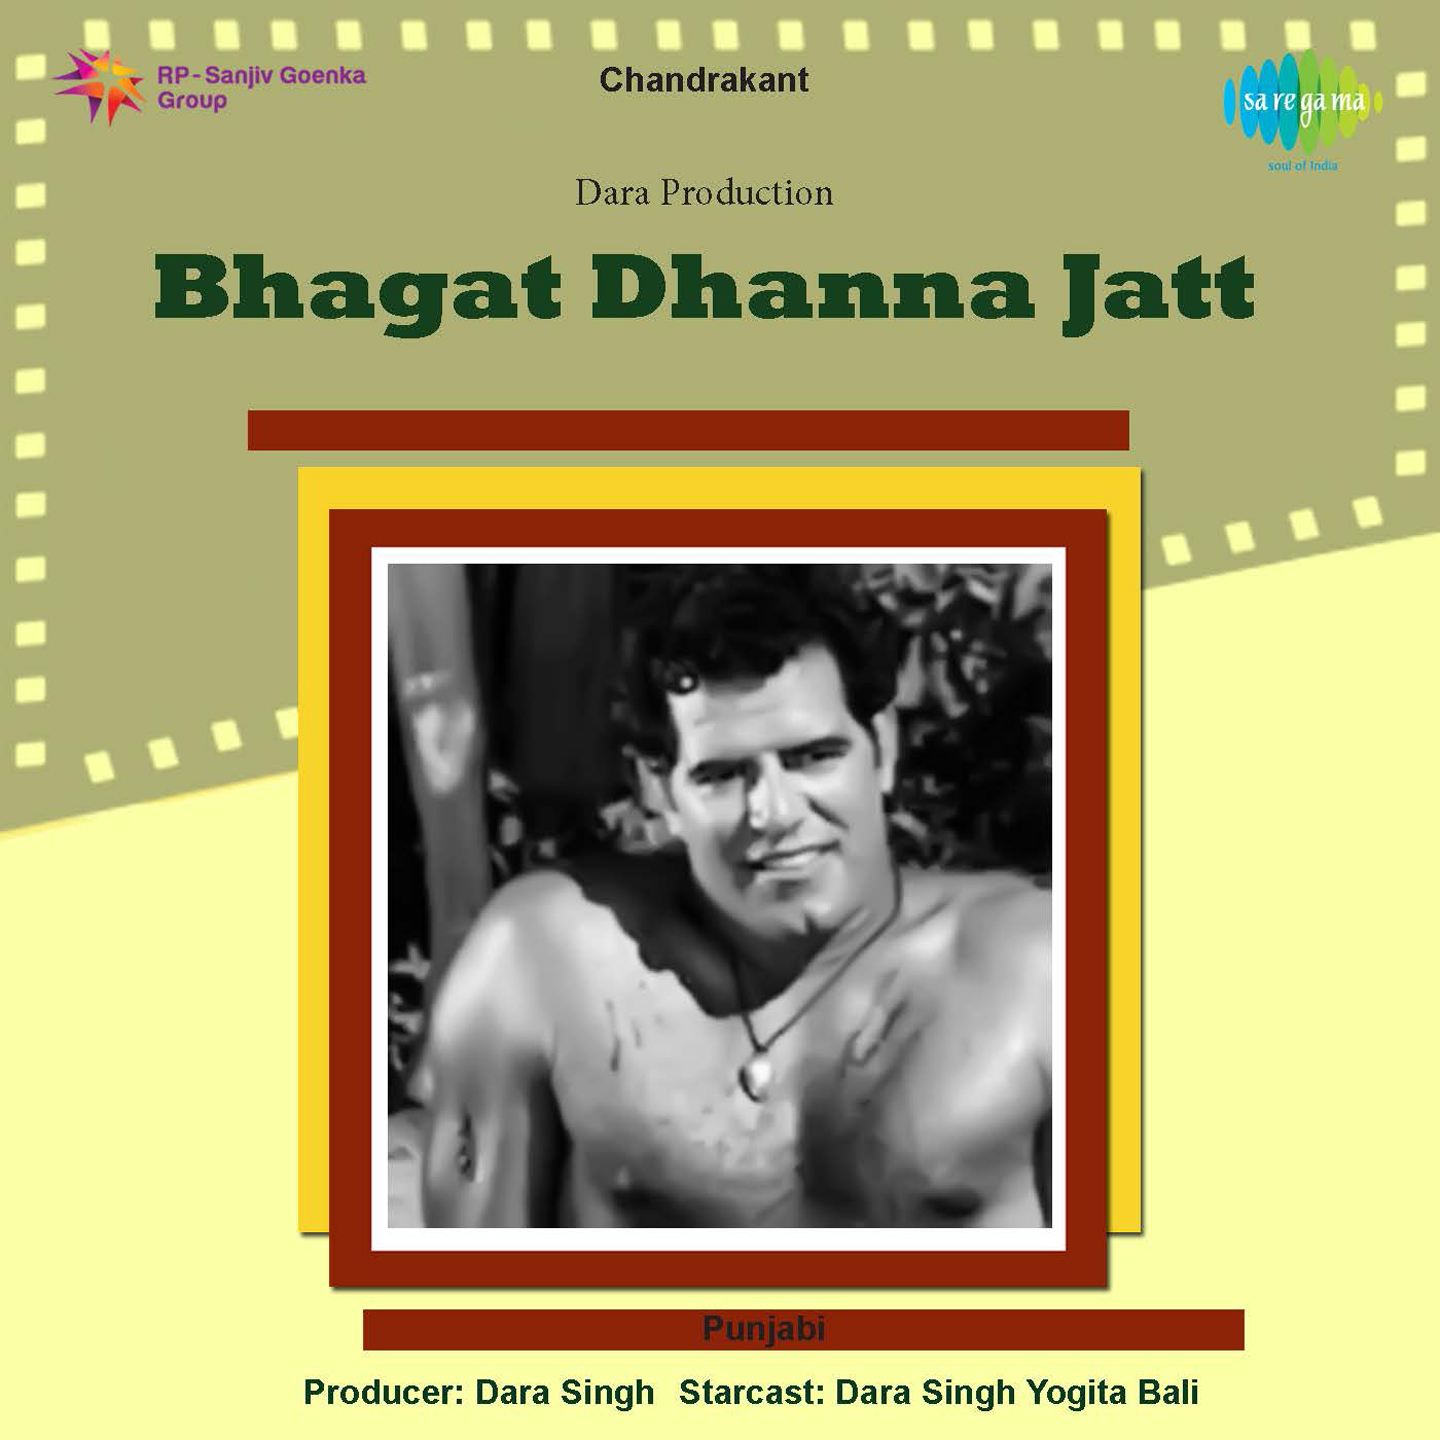 Bhagat Dhanna Jatt